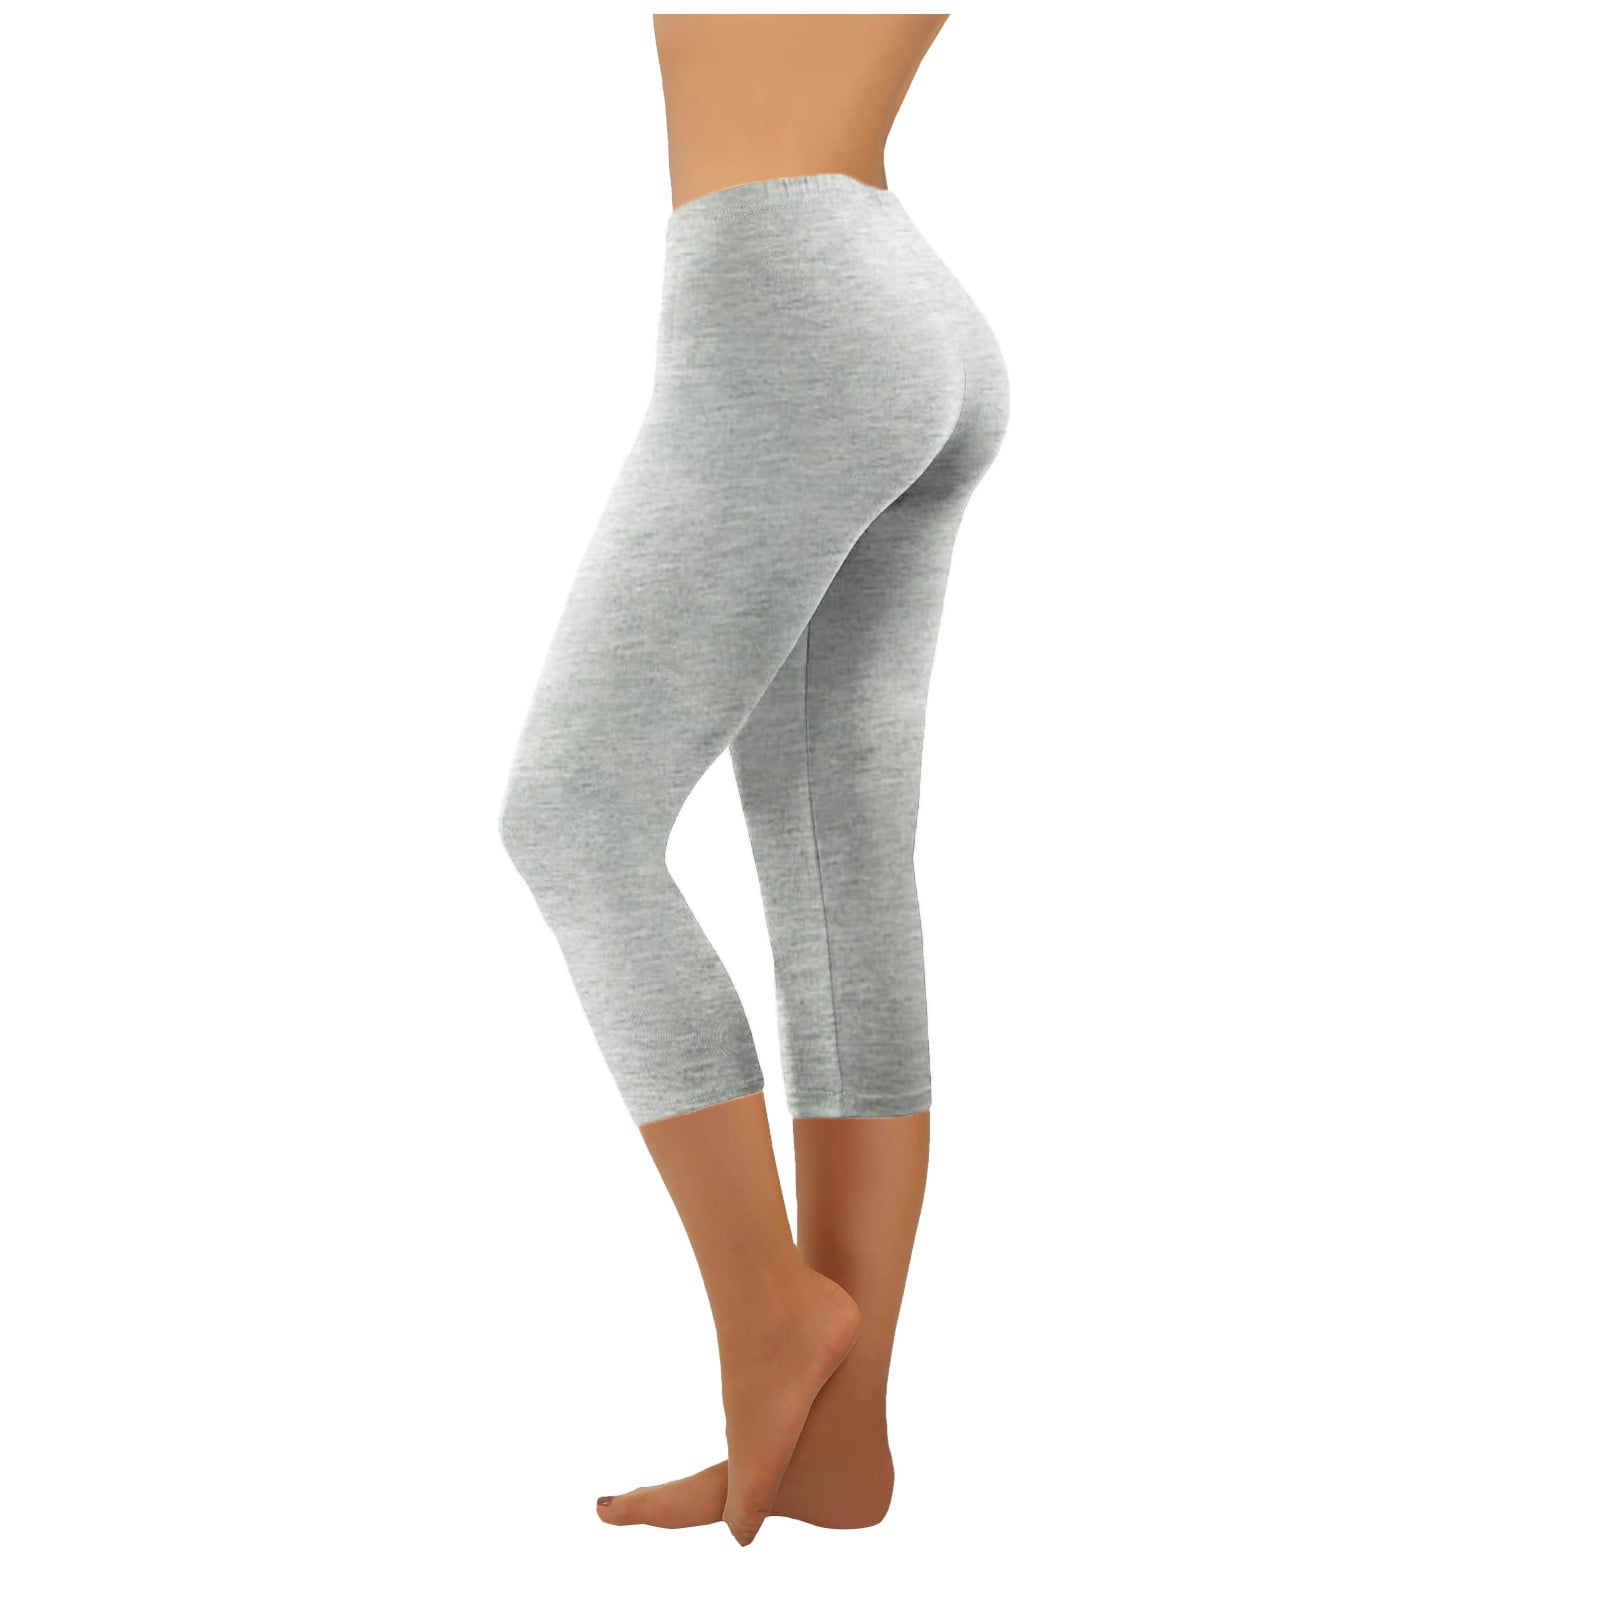 Capri Leggings for High Waisted Workout Running Leggings Fit Yoga Pants Walmart.com